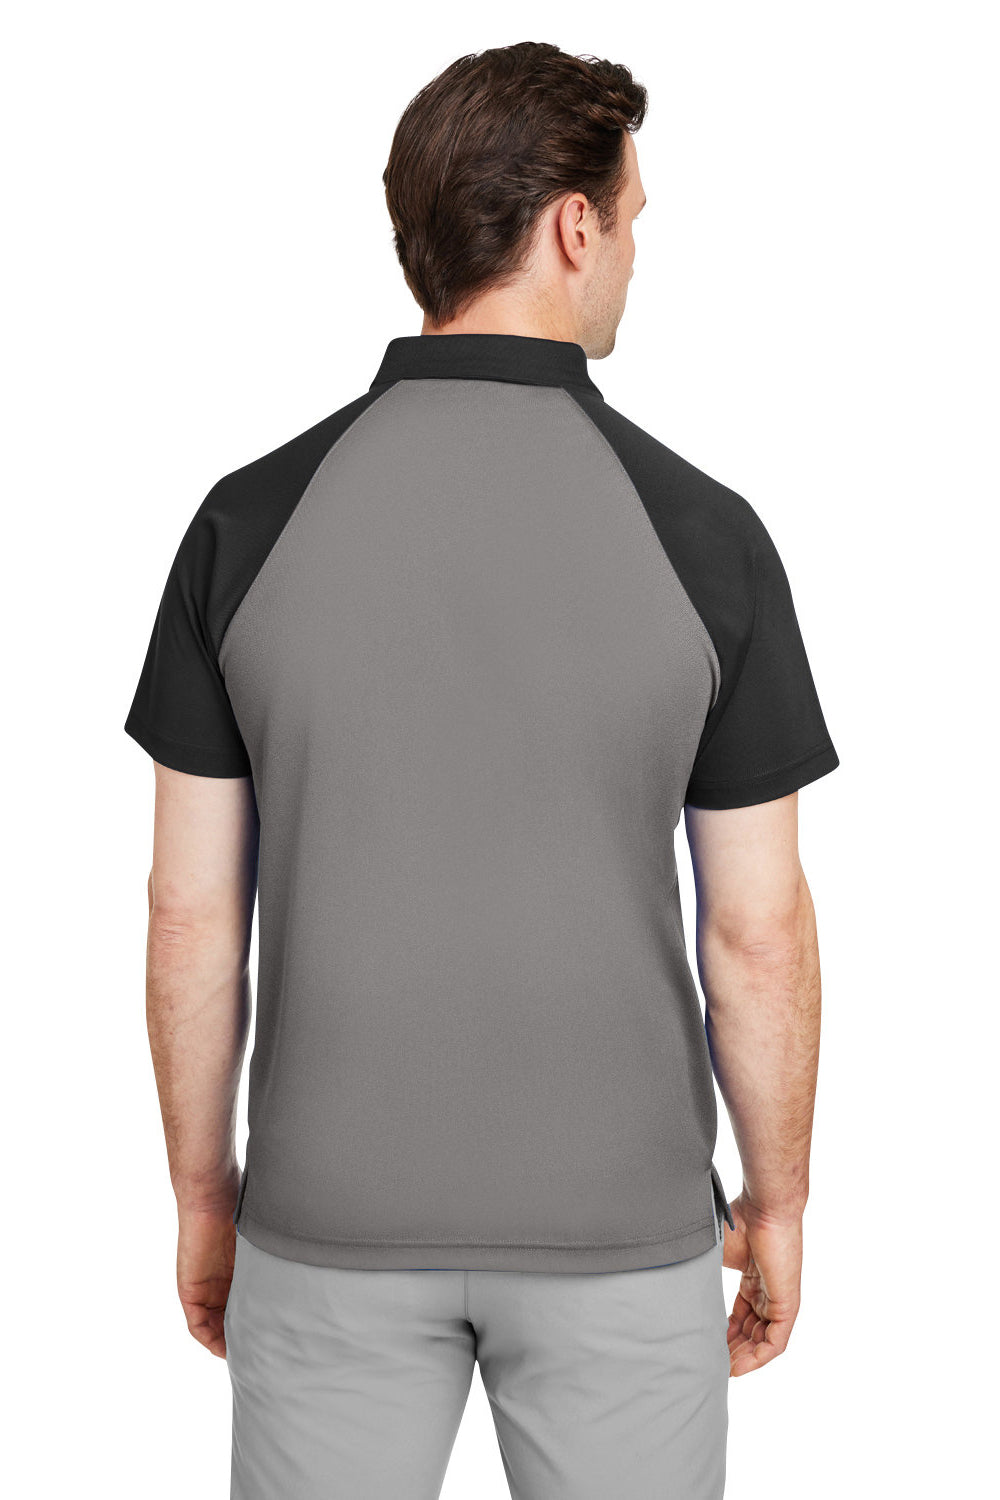 Team 365 TT21C Mens Command Colorblock Moisture Wicking Short Sleeve Polo Shirt Graphite Grey/Black Back